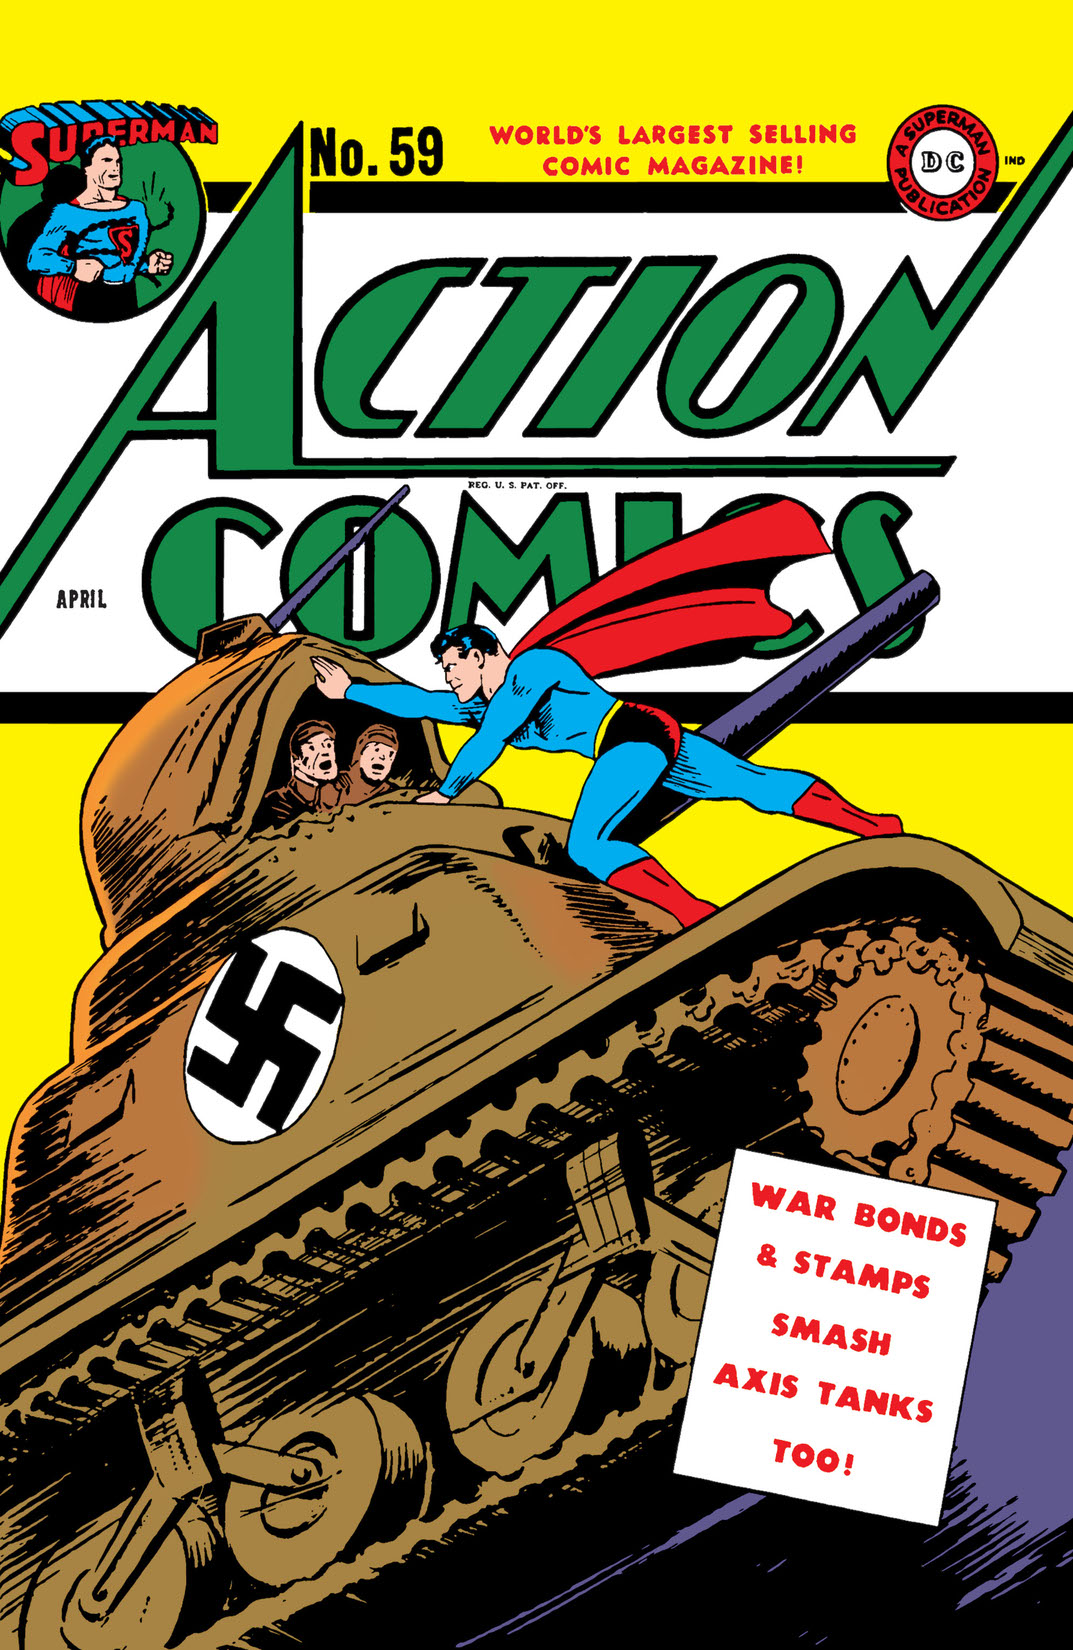 Action Comics (1938-) #59 preview images